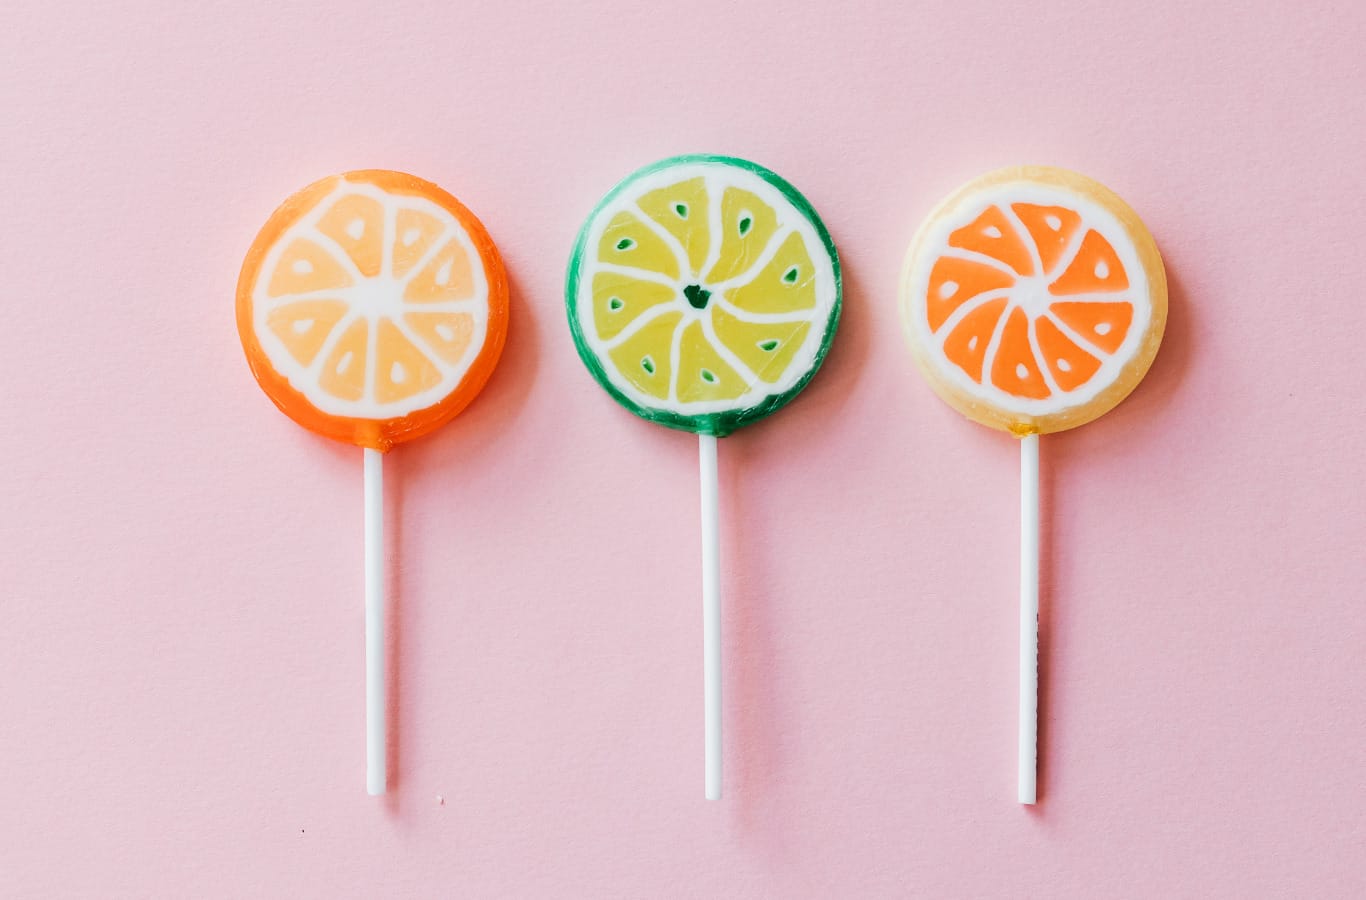 social media best practices blog header image. pink background with three citrus lollipops for decoration